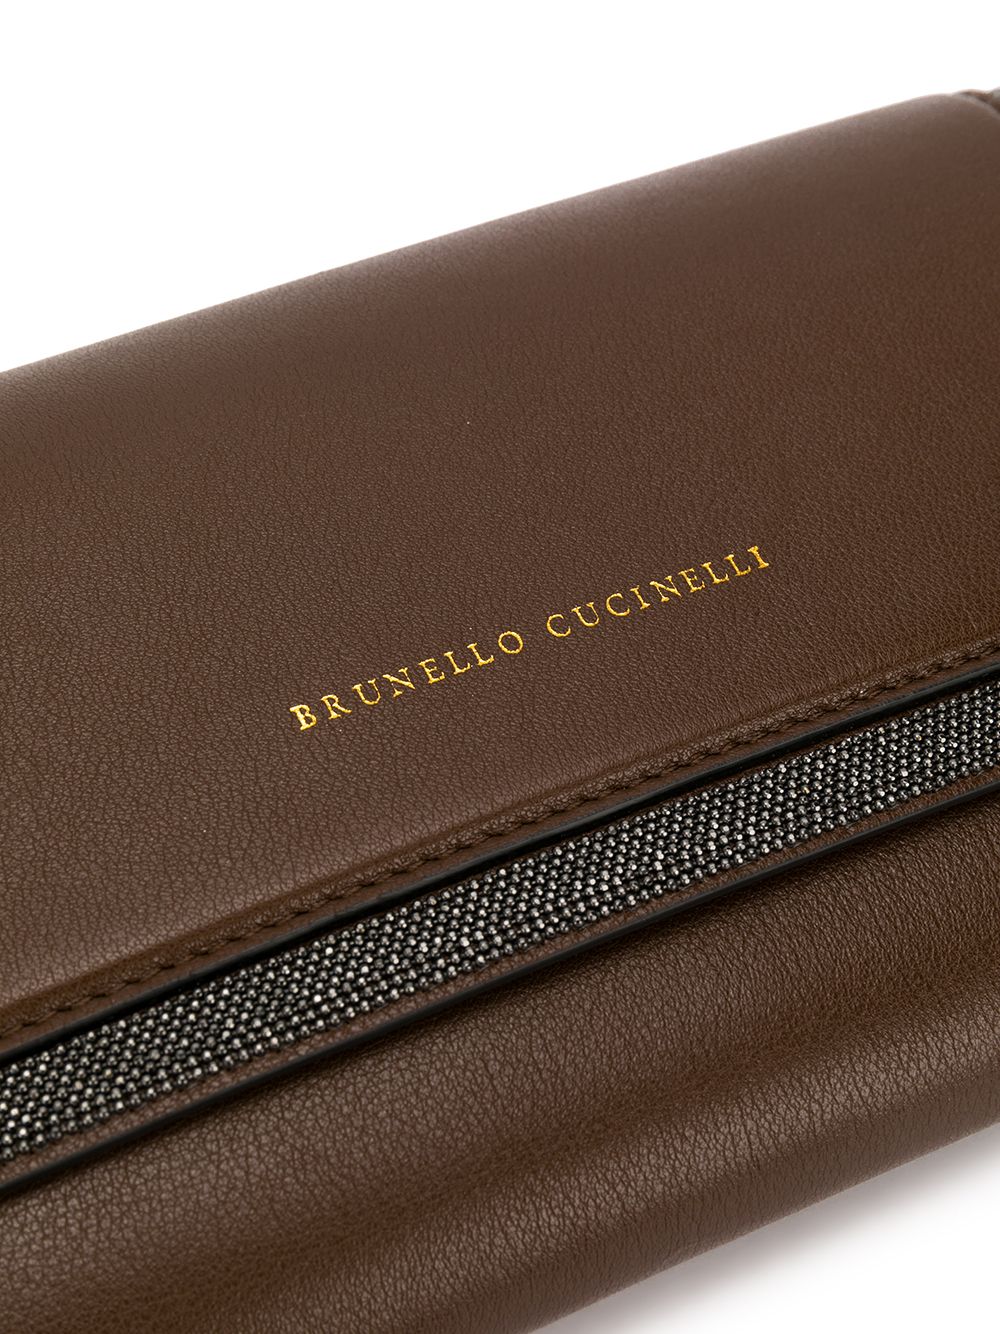 фото Brunello cucinelli поясная сумка с отделкой monili